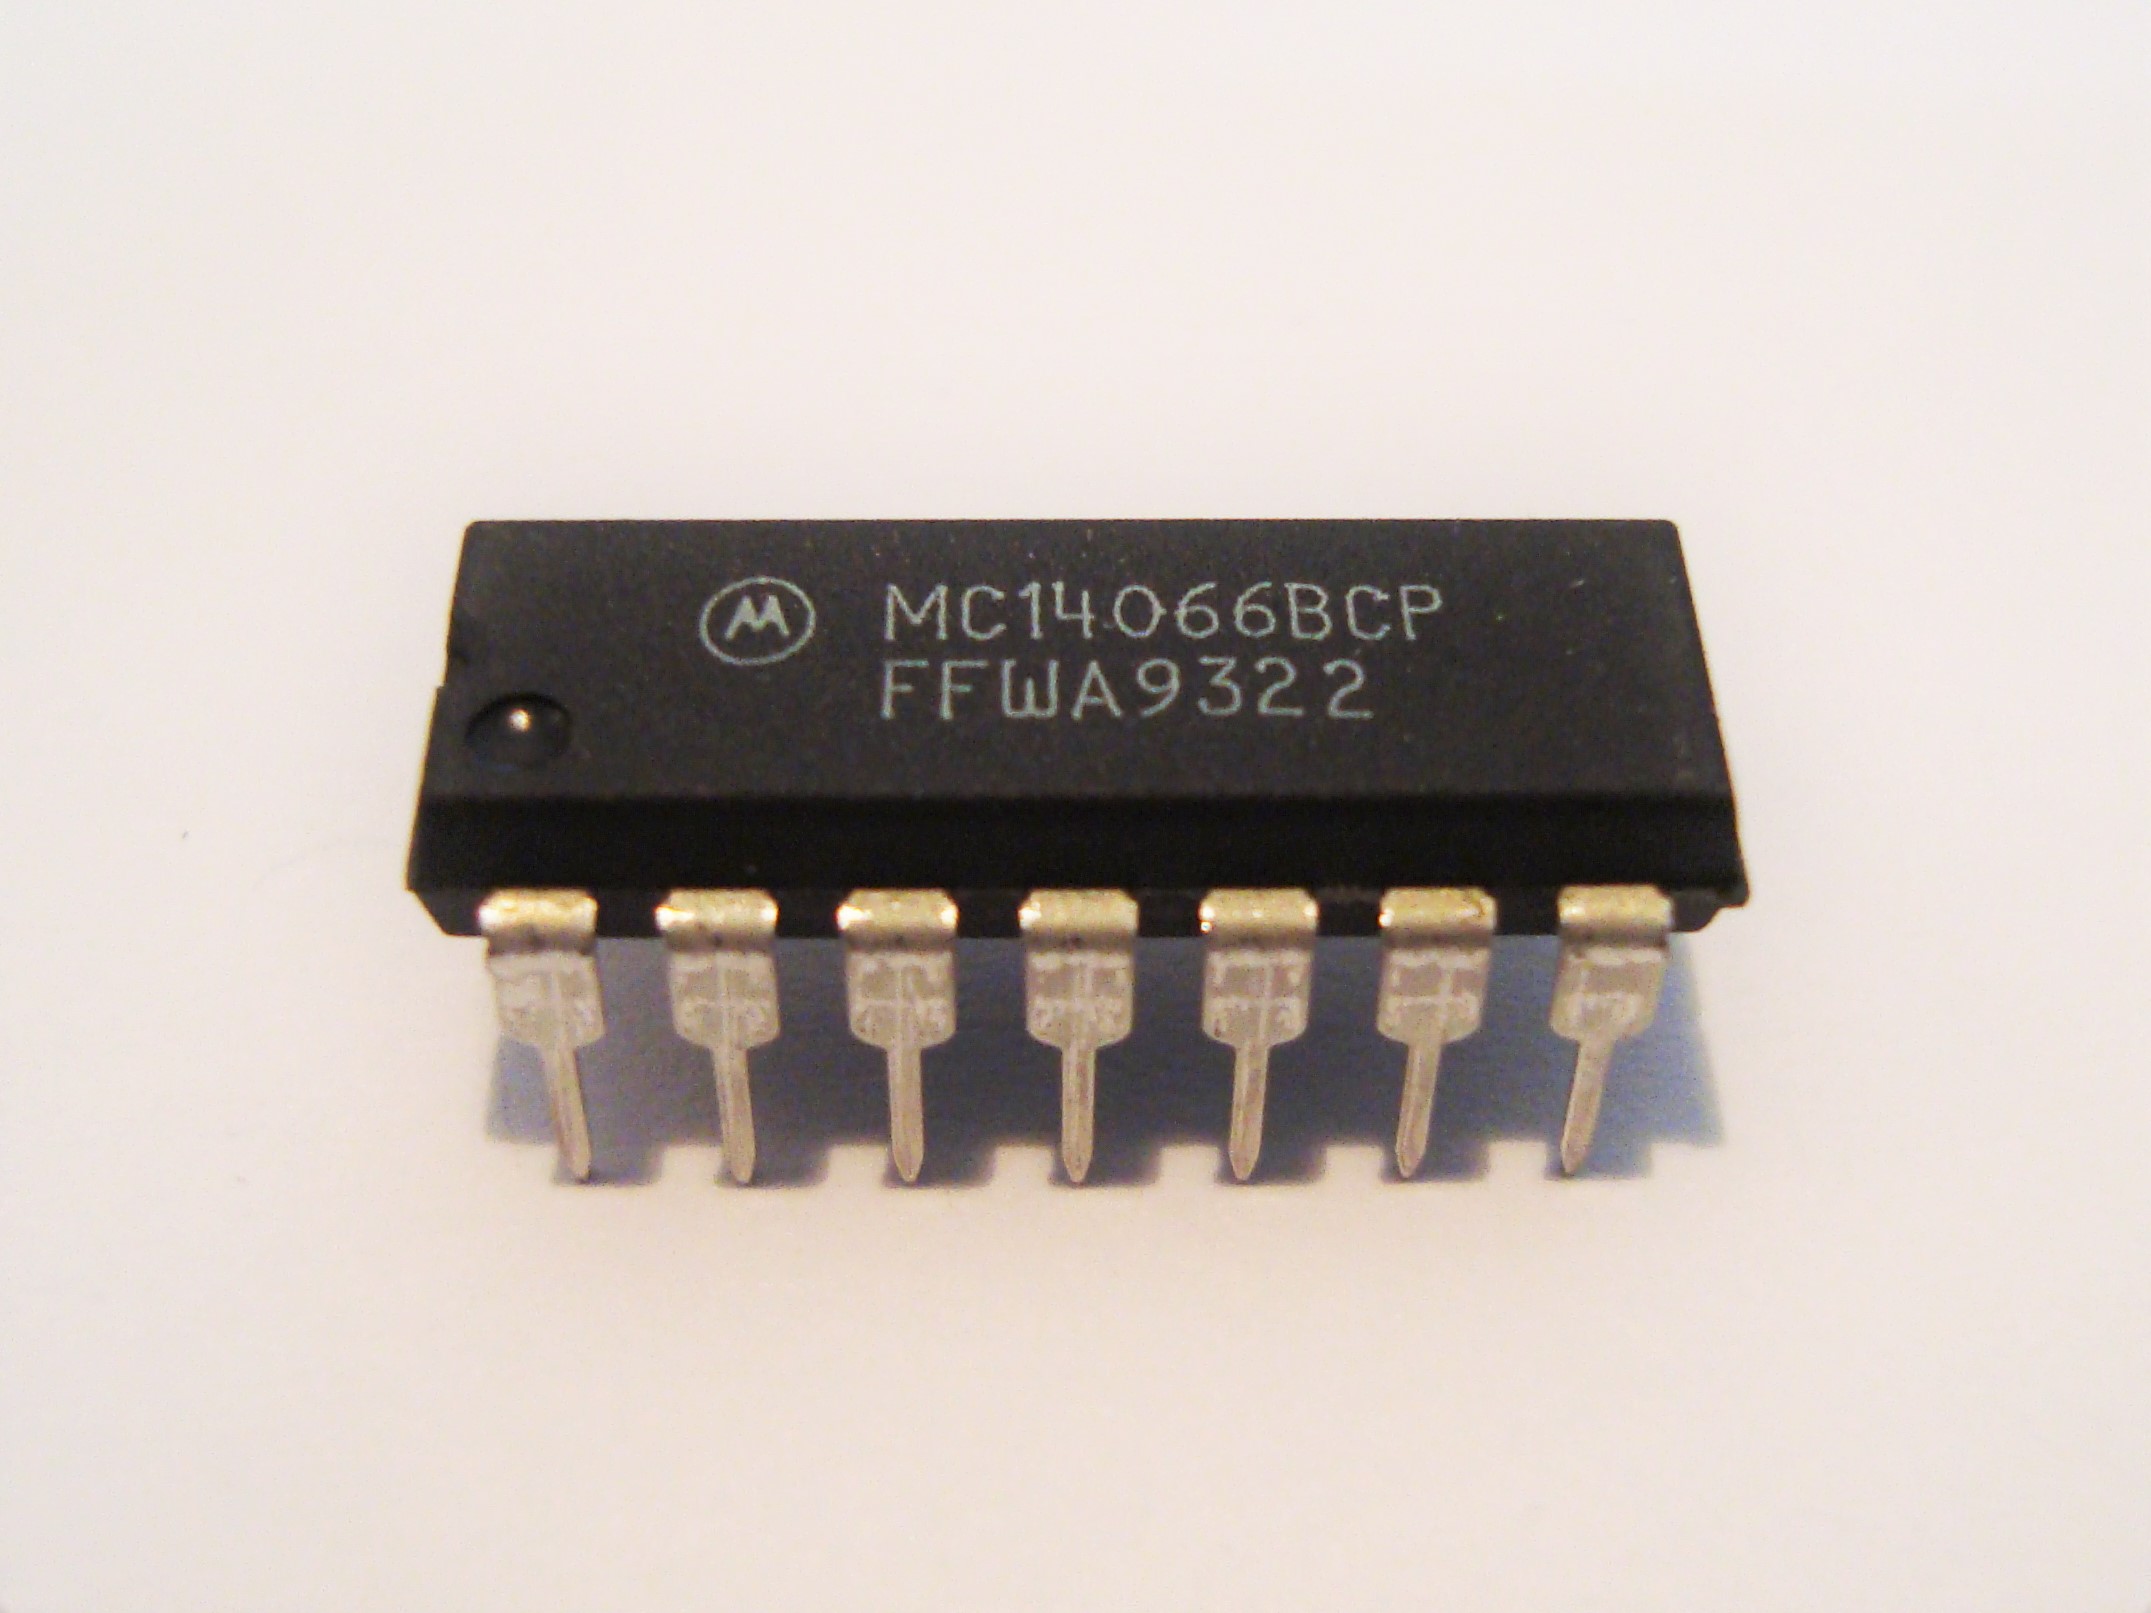 MC14066BCP Integrated Circuit | Time Travel Audio, Vintage Audio ...